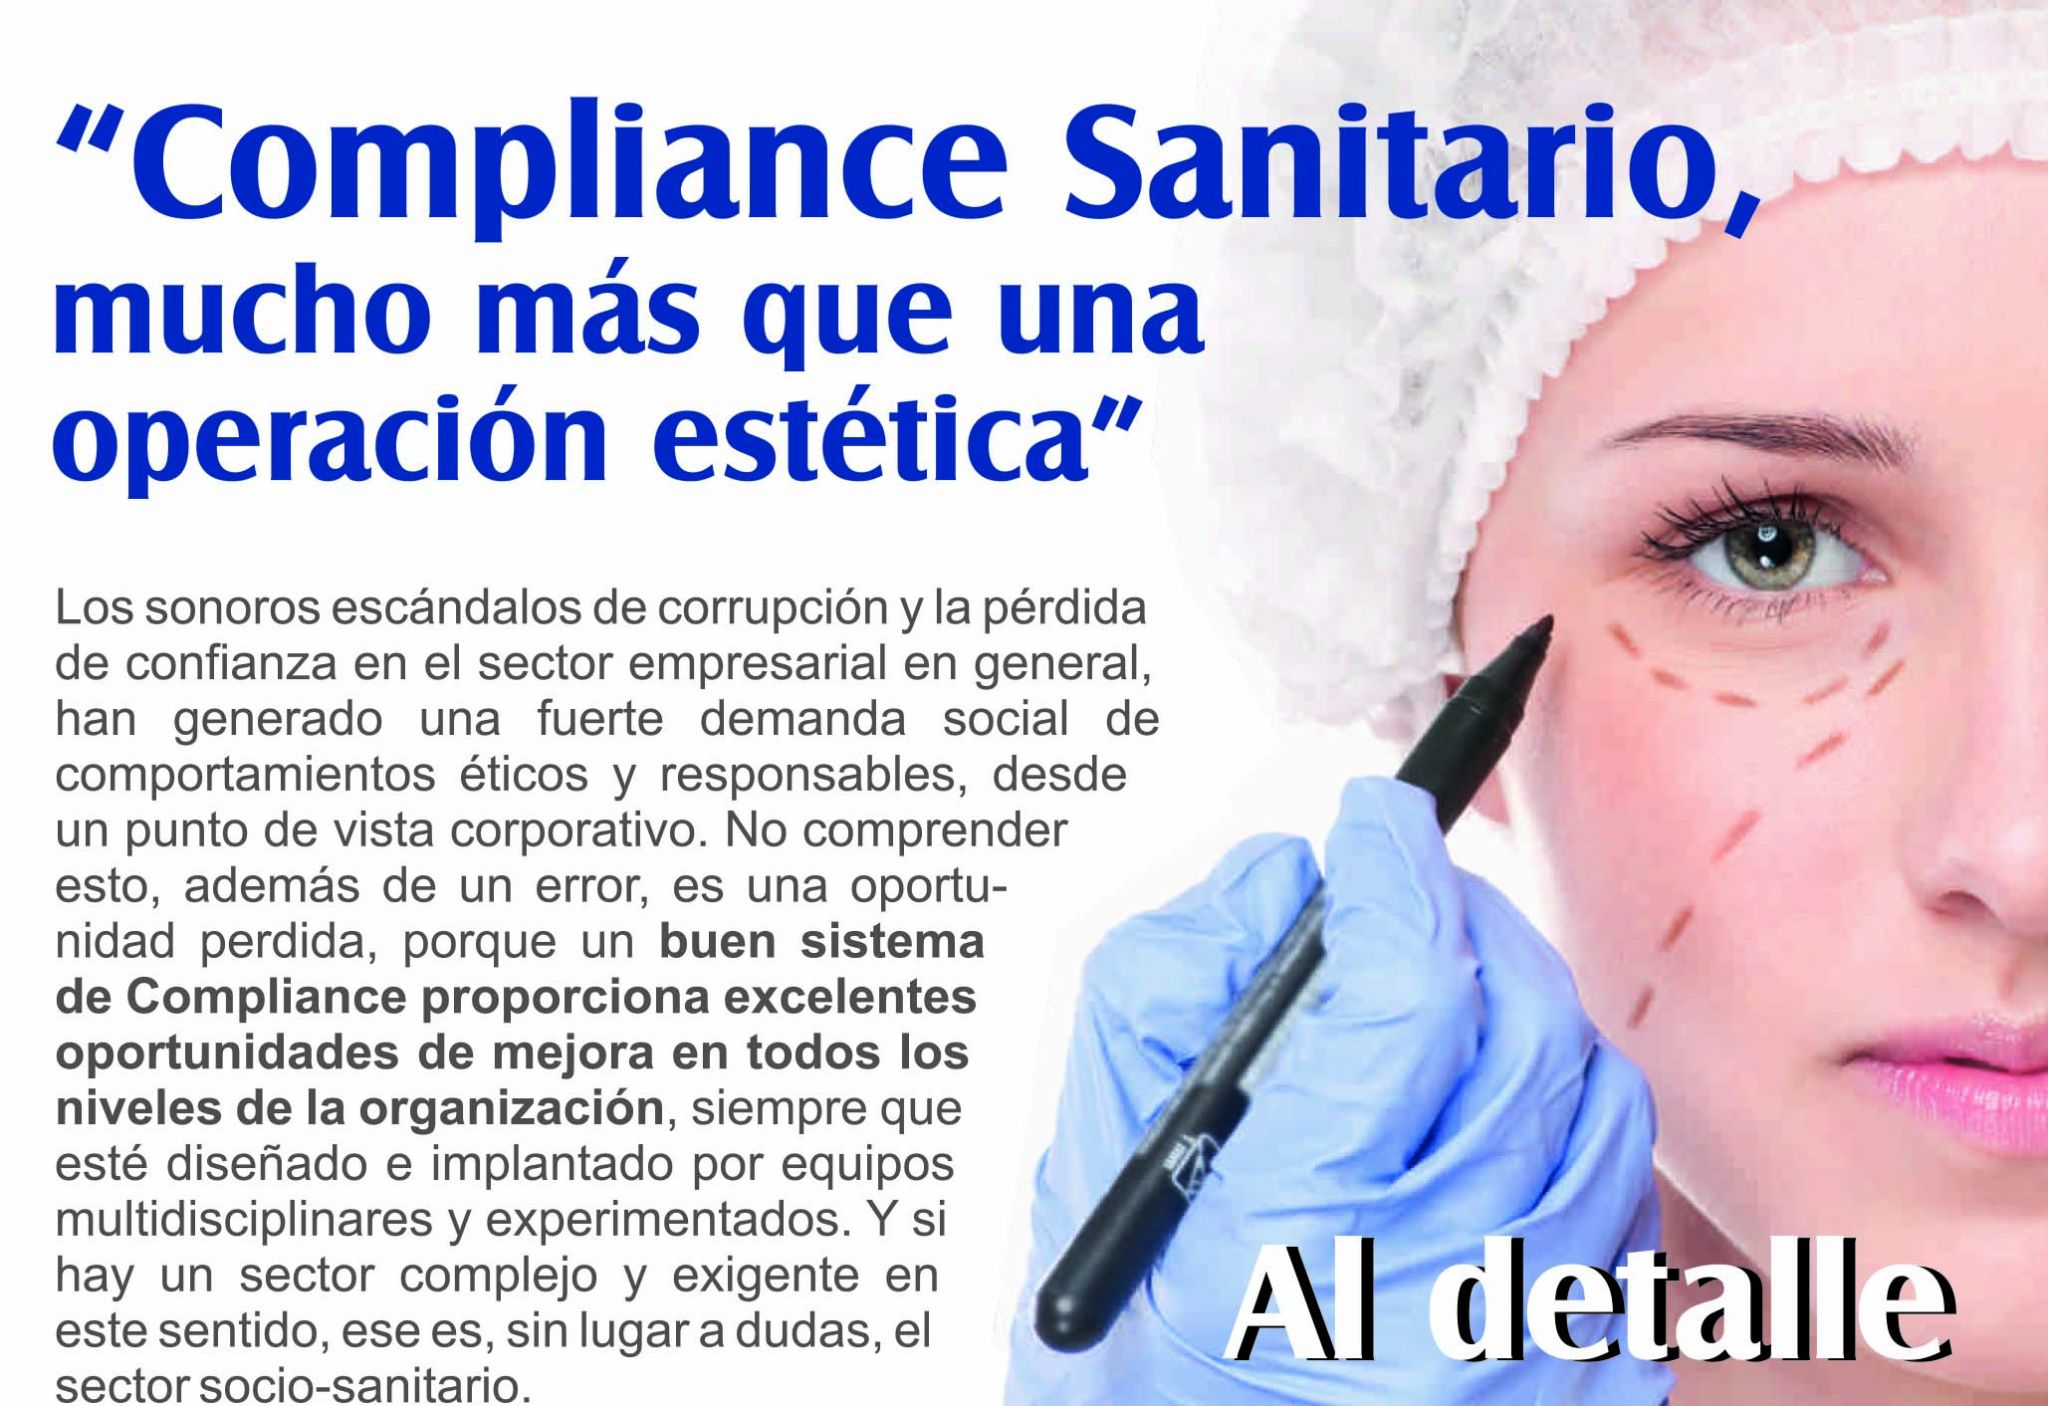 Portada-artículo-Compliance-Sanitario-1024x703@2x